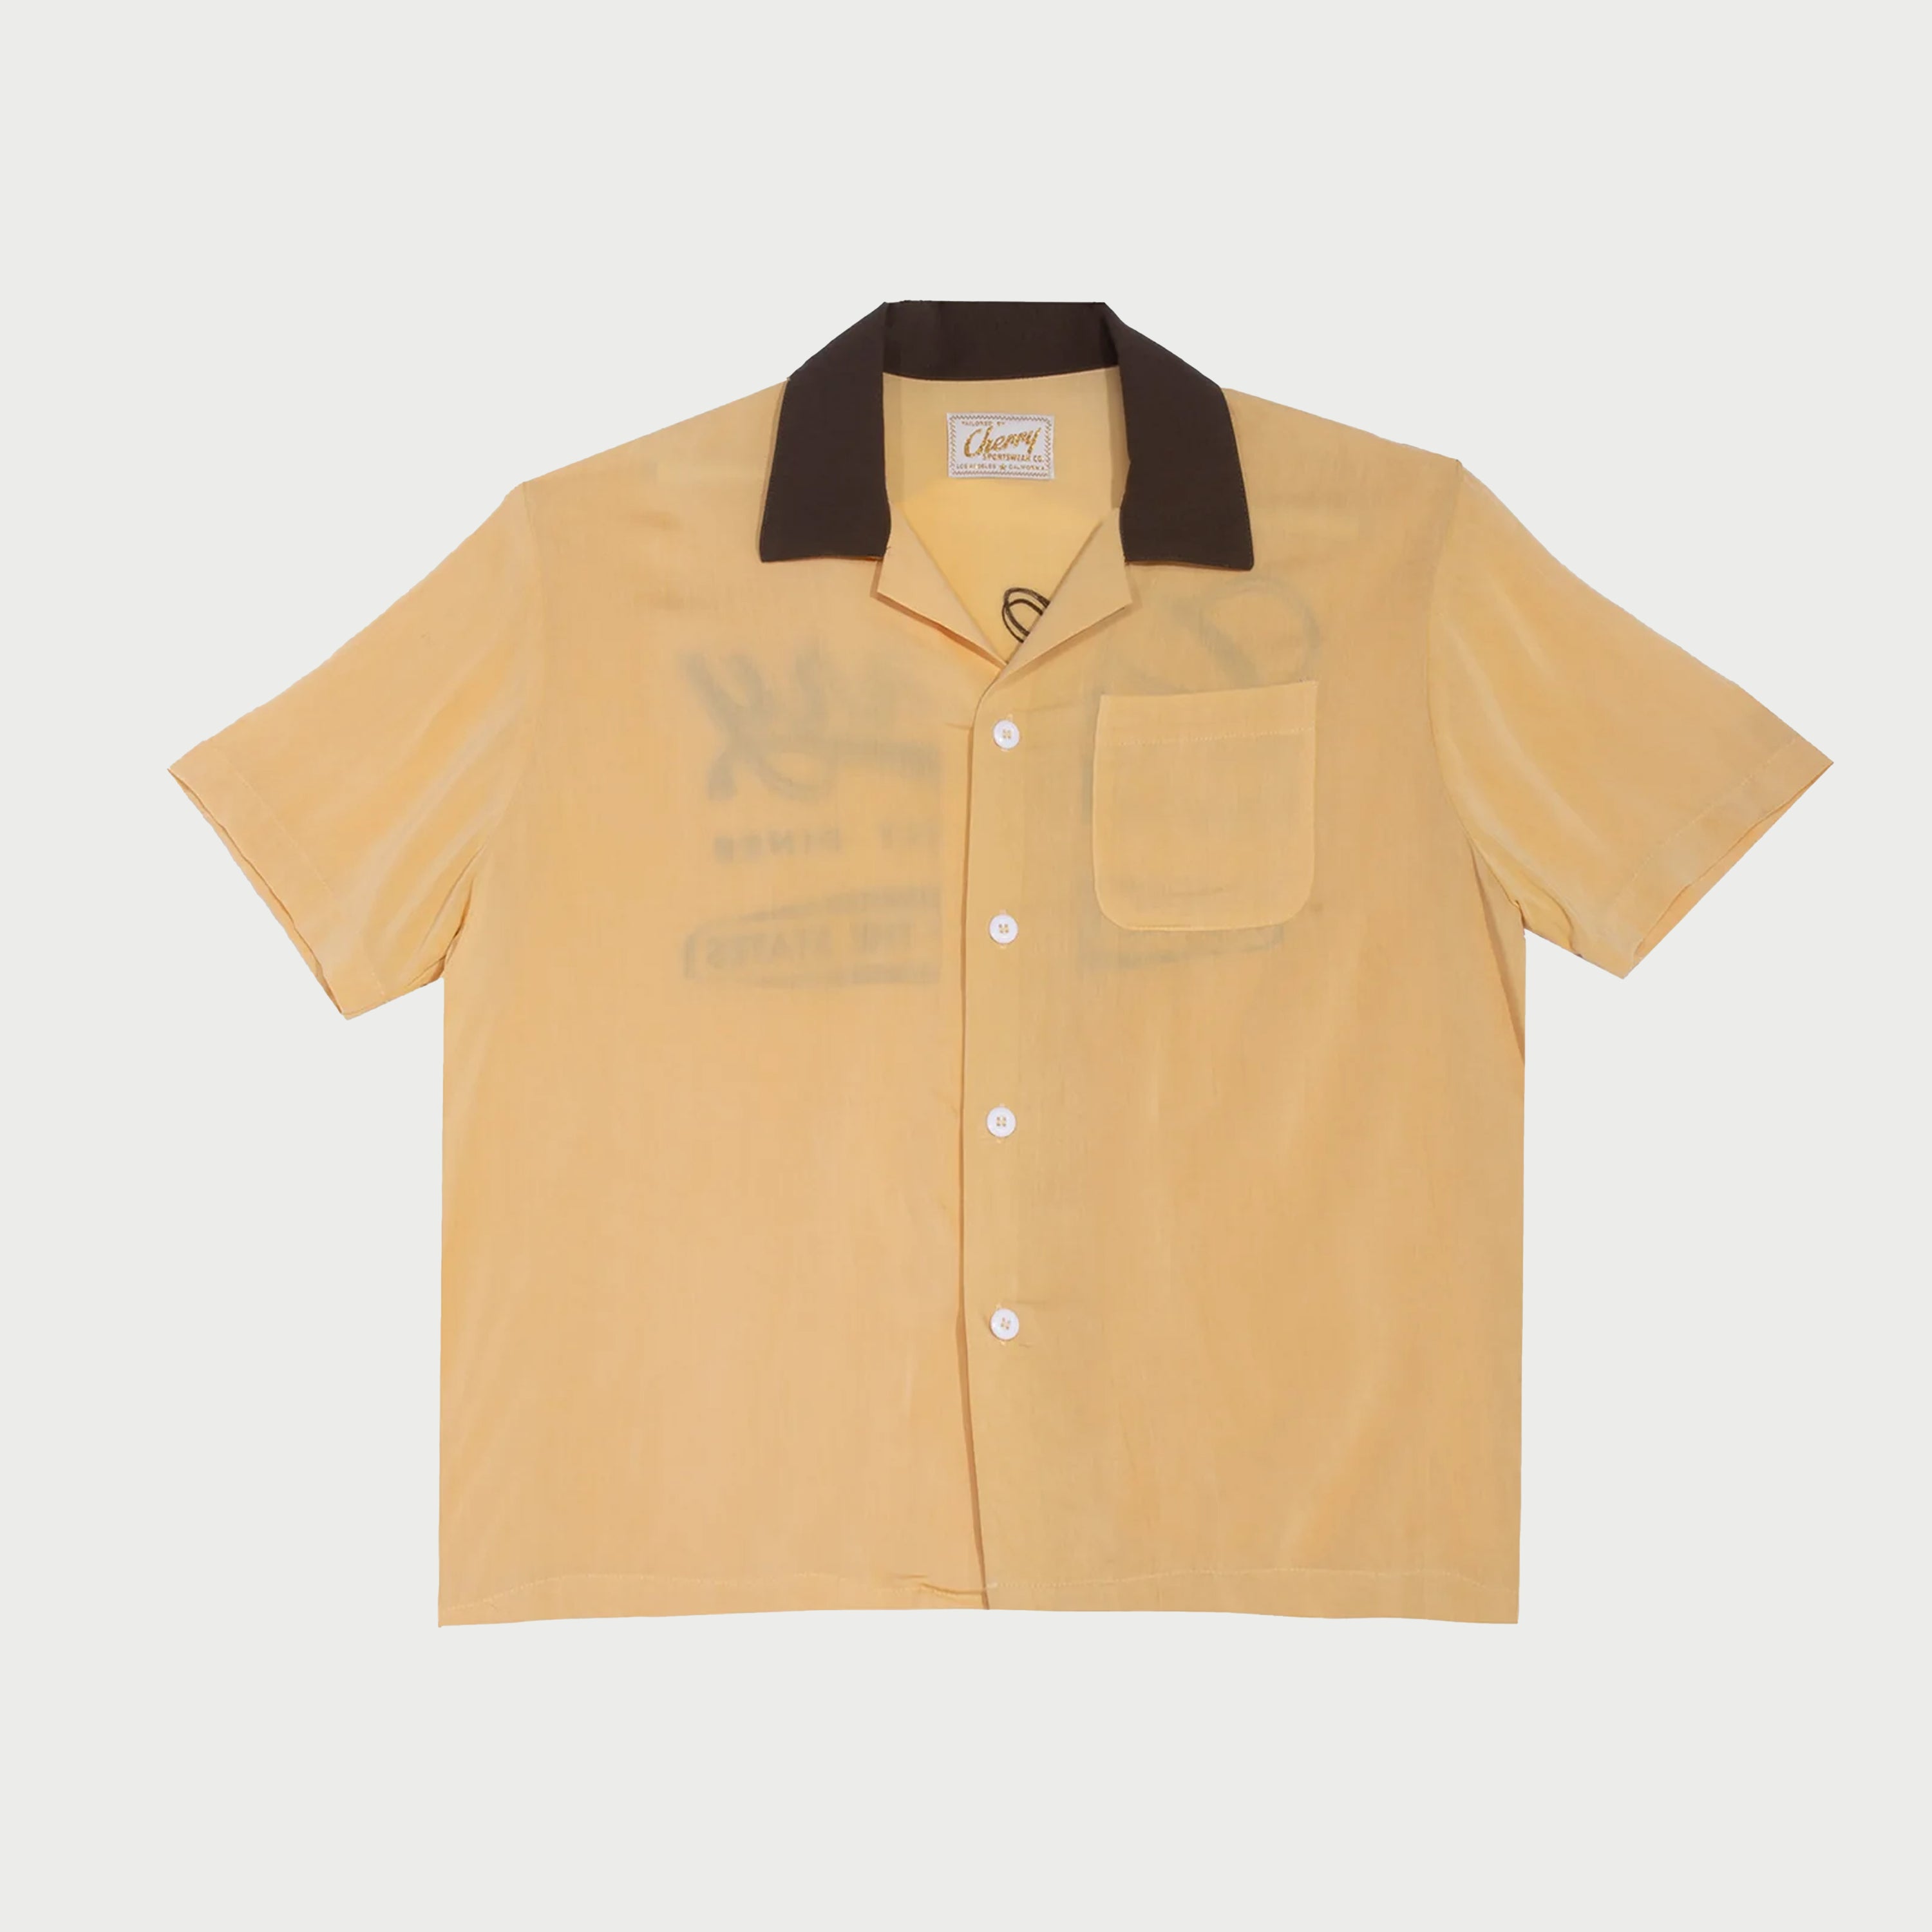 Cherry Diner Bowling Shirt (Yellow)